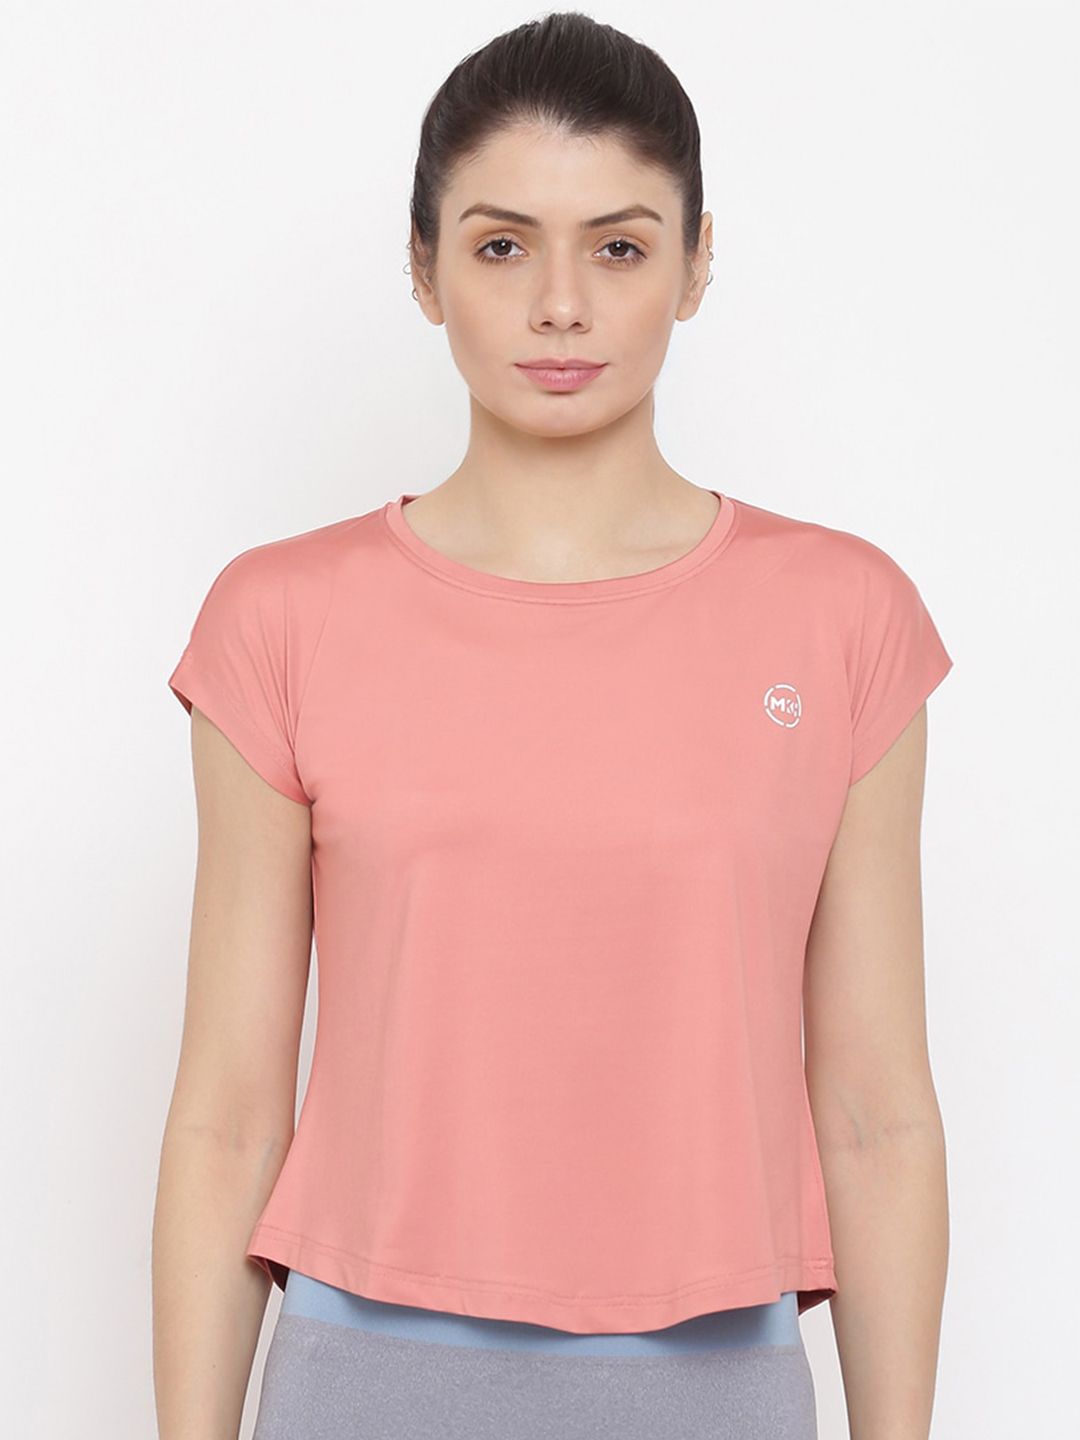 MKH Women Pink Dri-FIT T-shirt Price in India